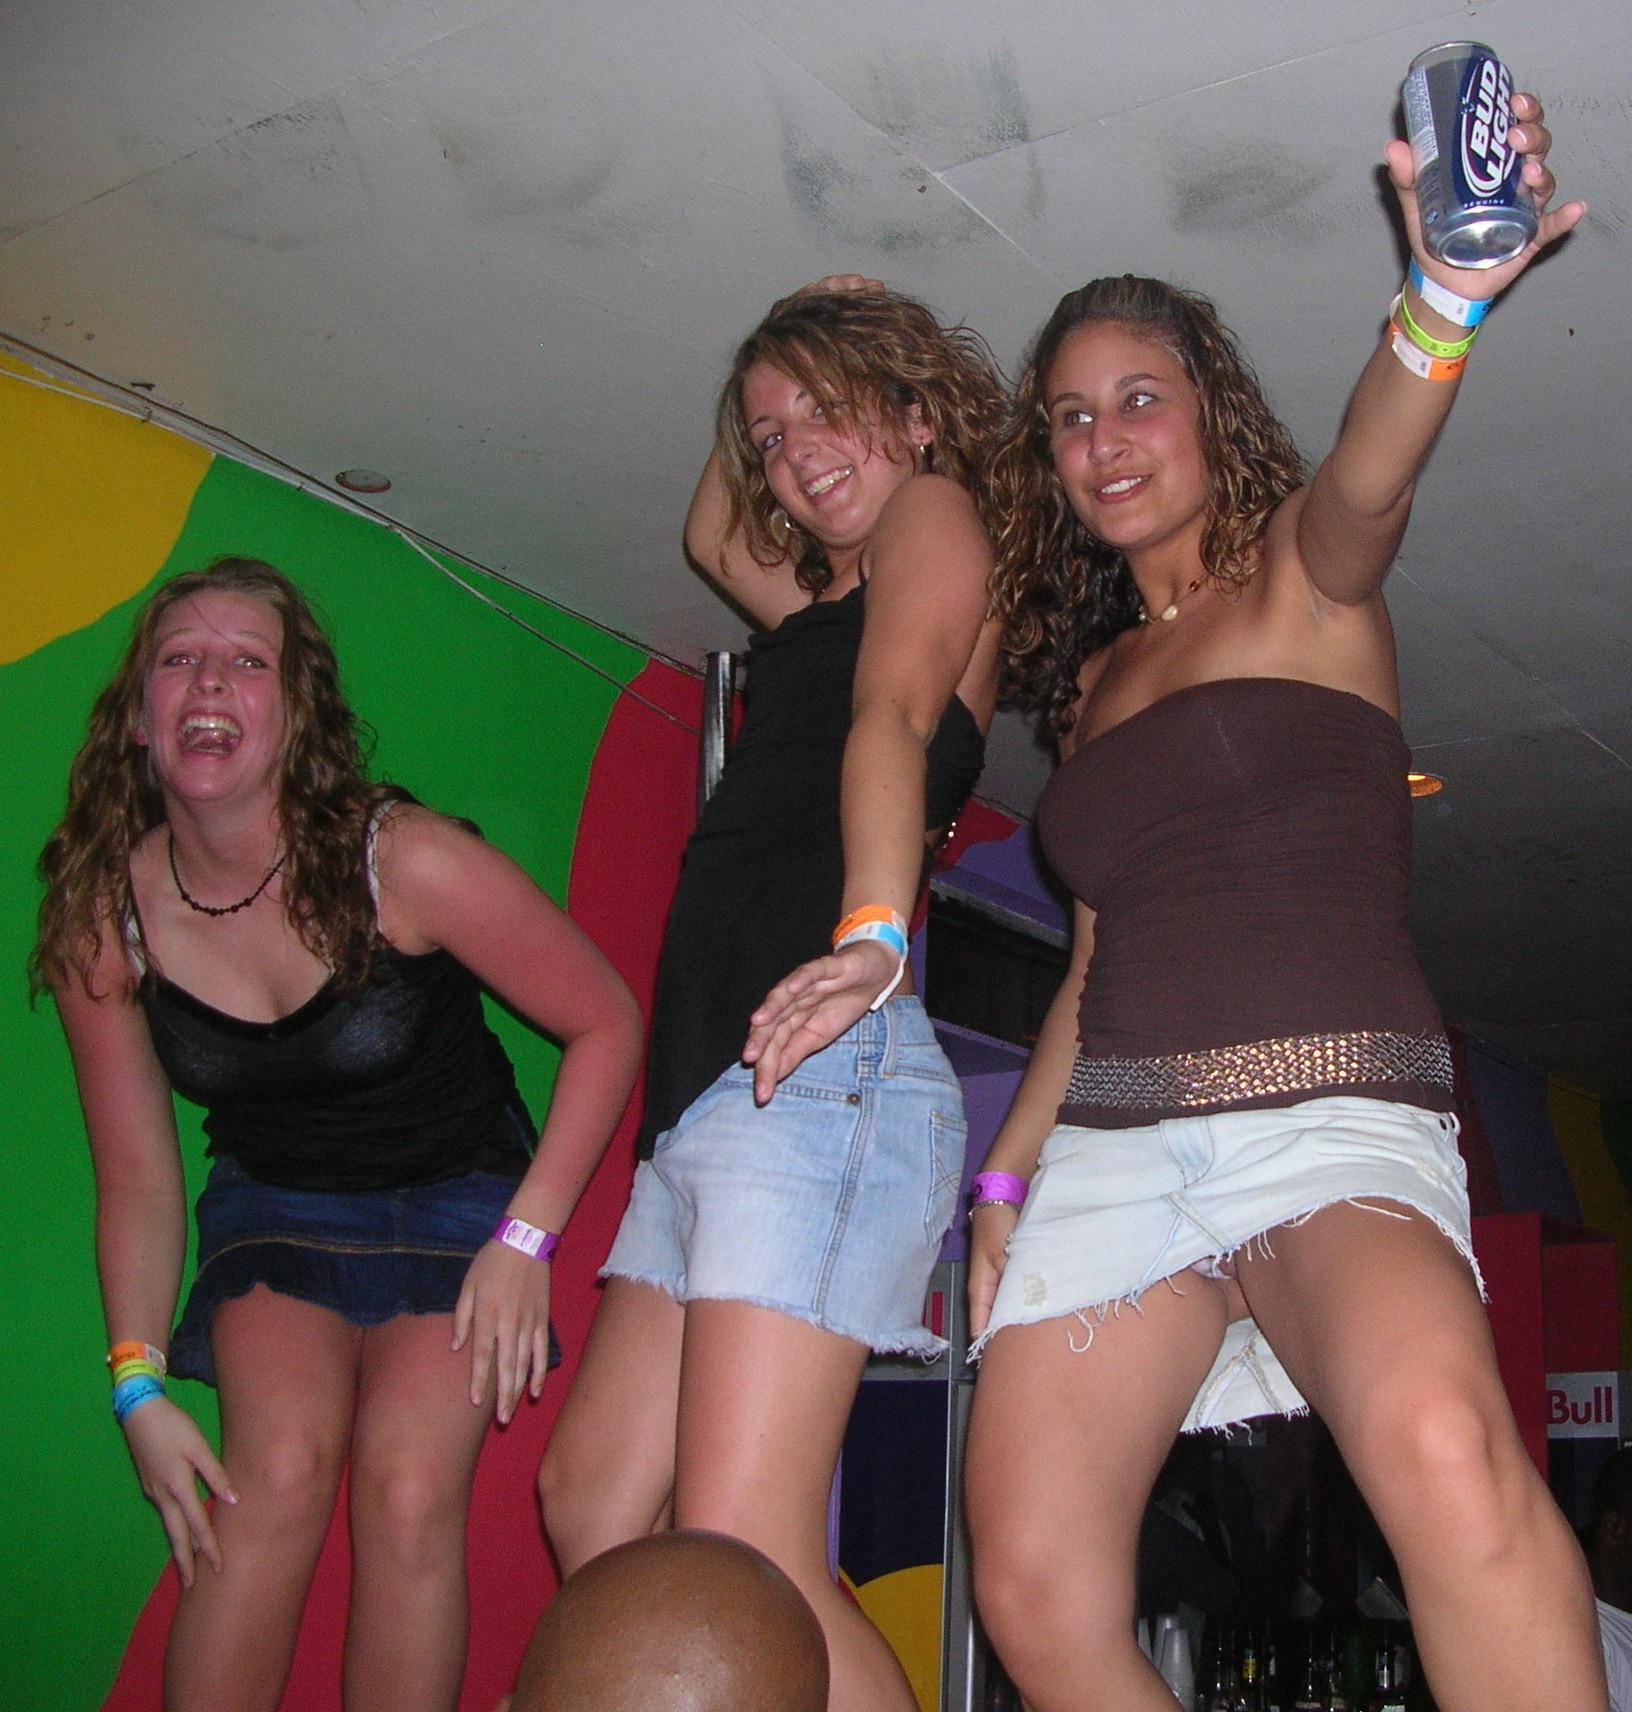 Drunk club girls upskirt